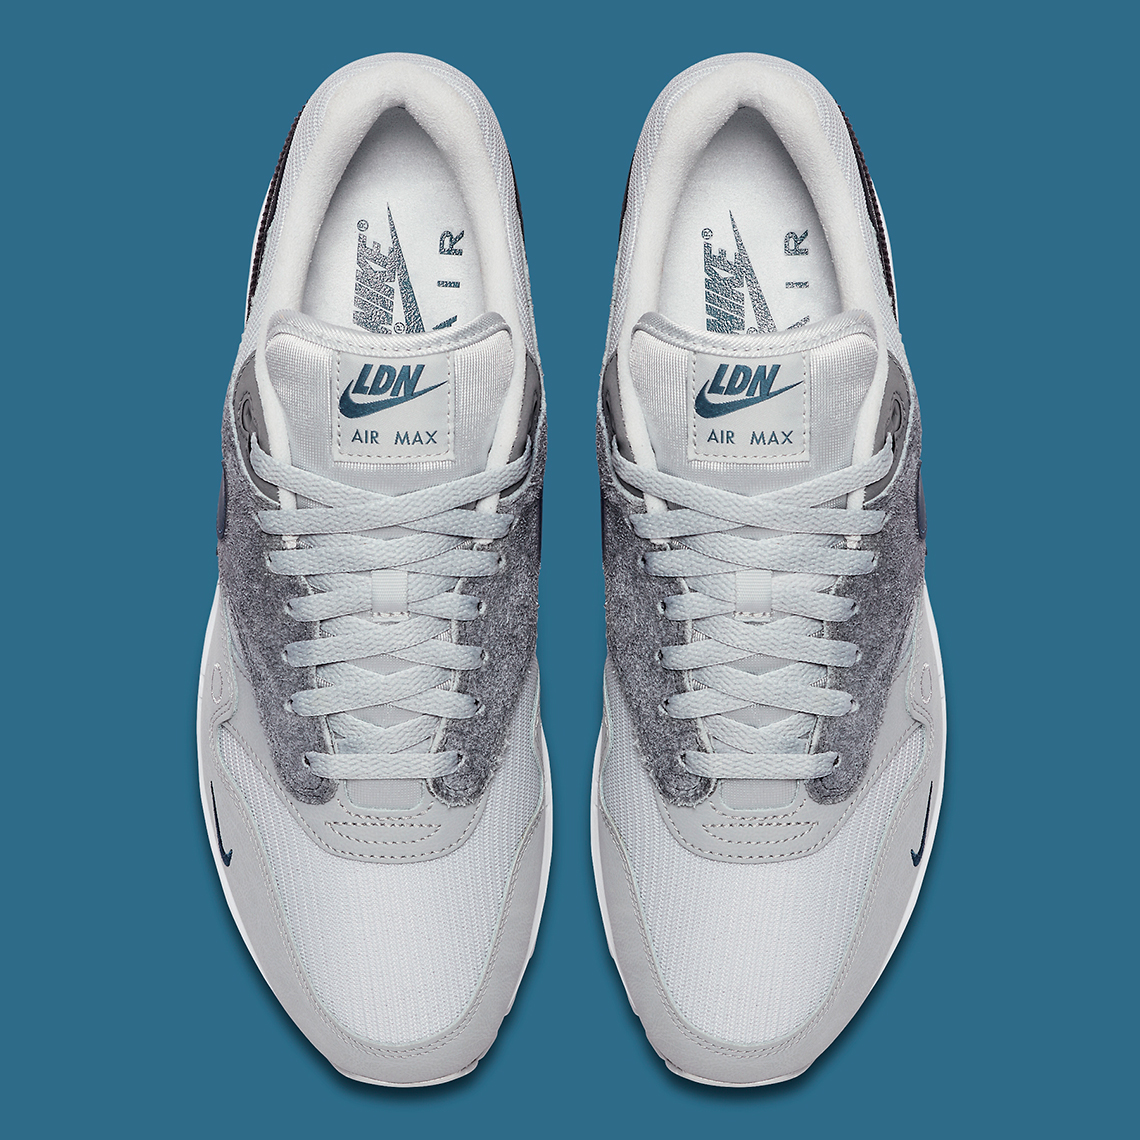 Nike Air Jordan 11 Cool Grey 28cm 1 City Pack London Cv1639 001 5